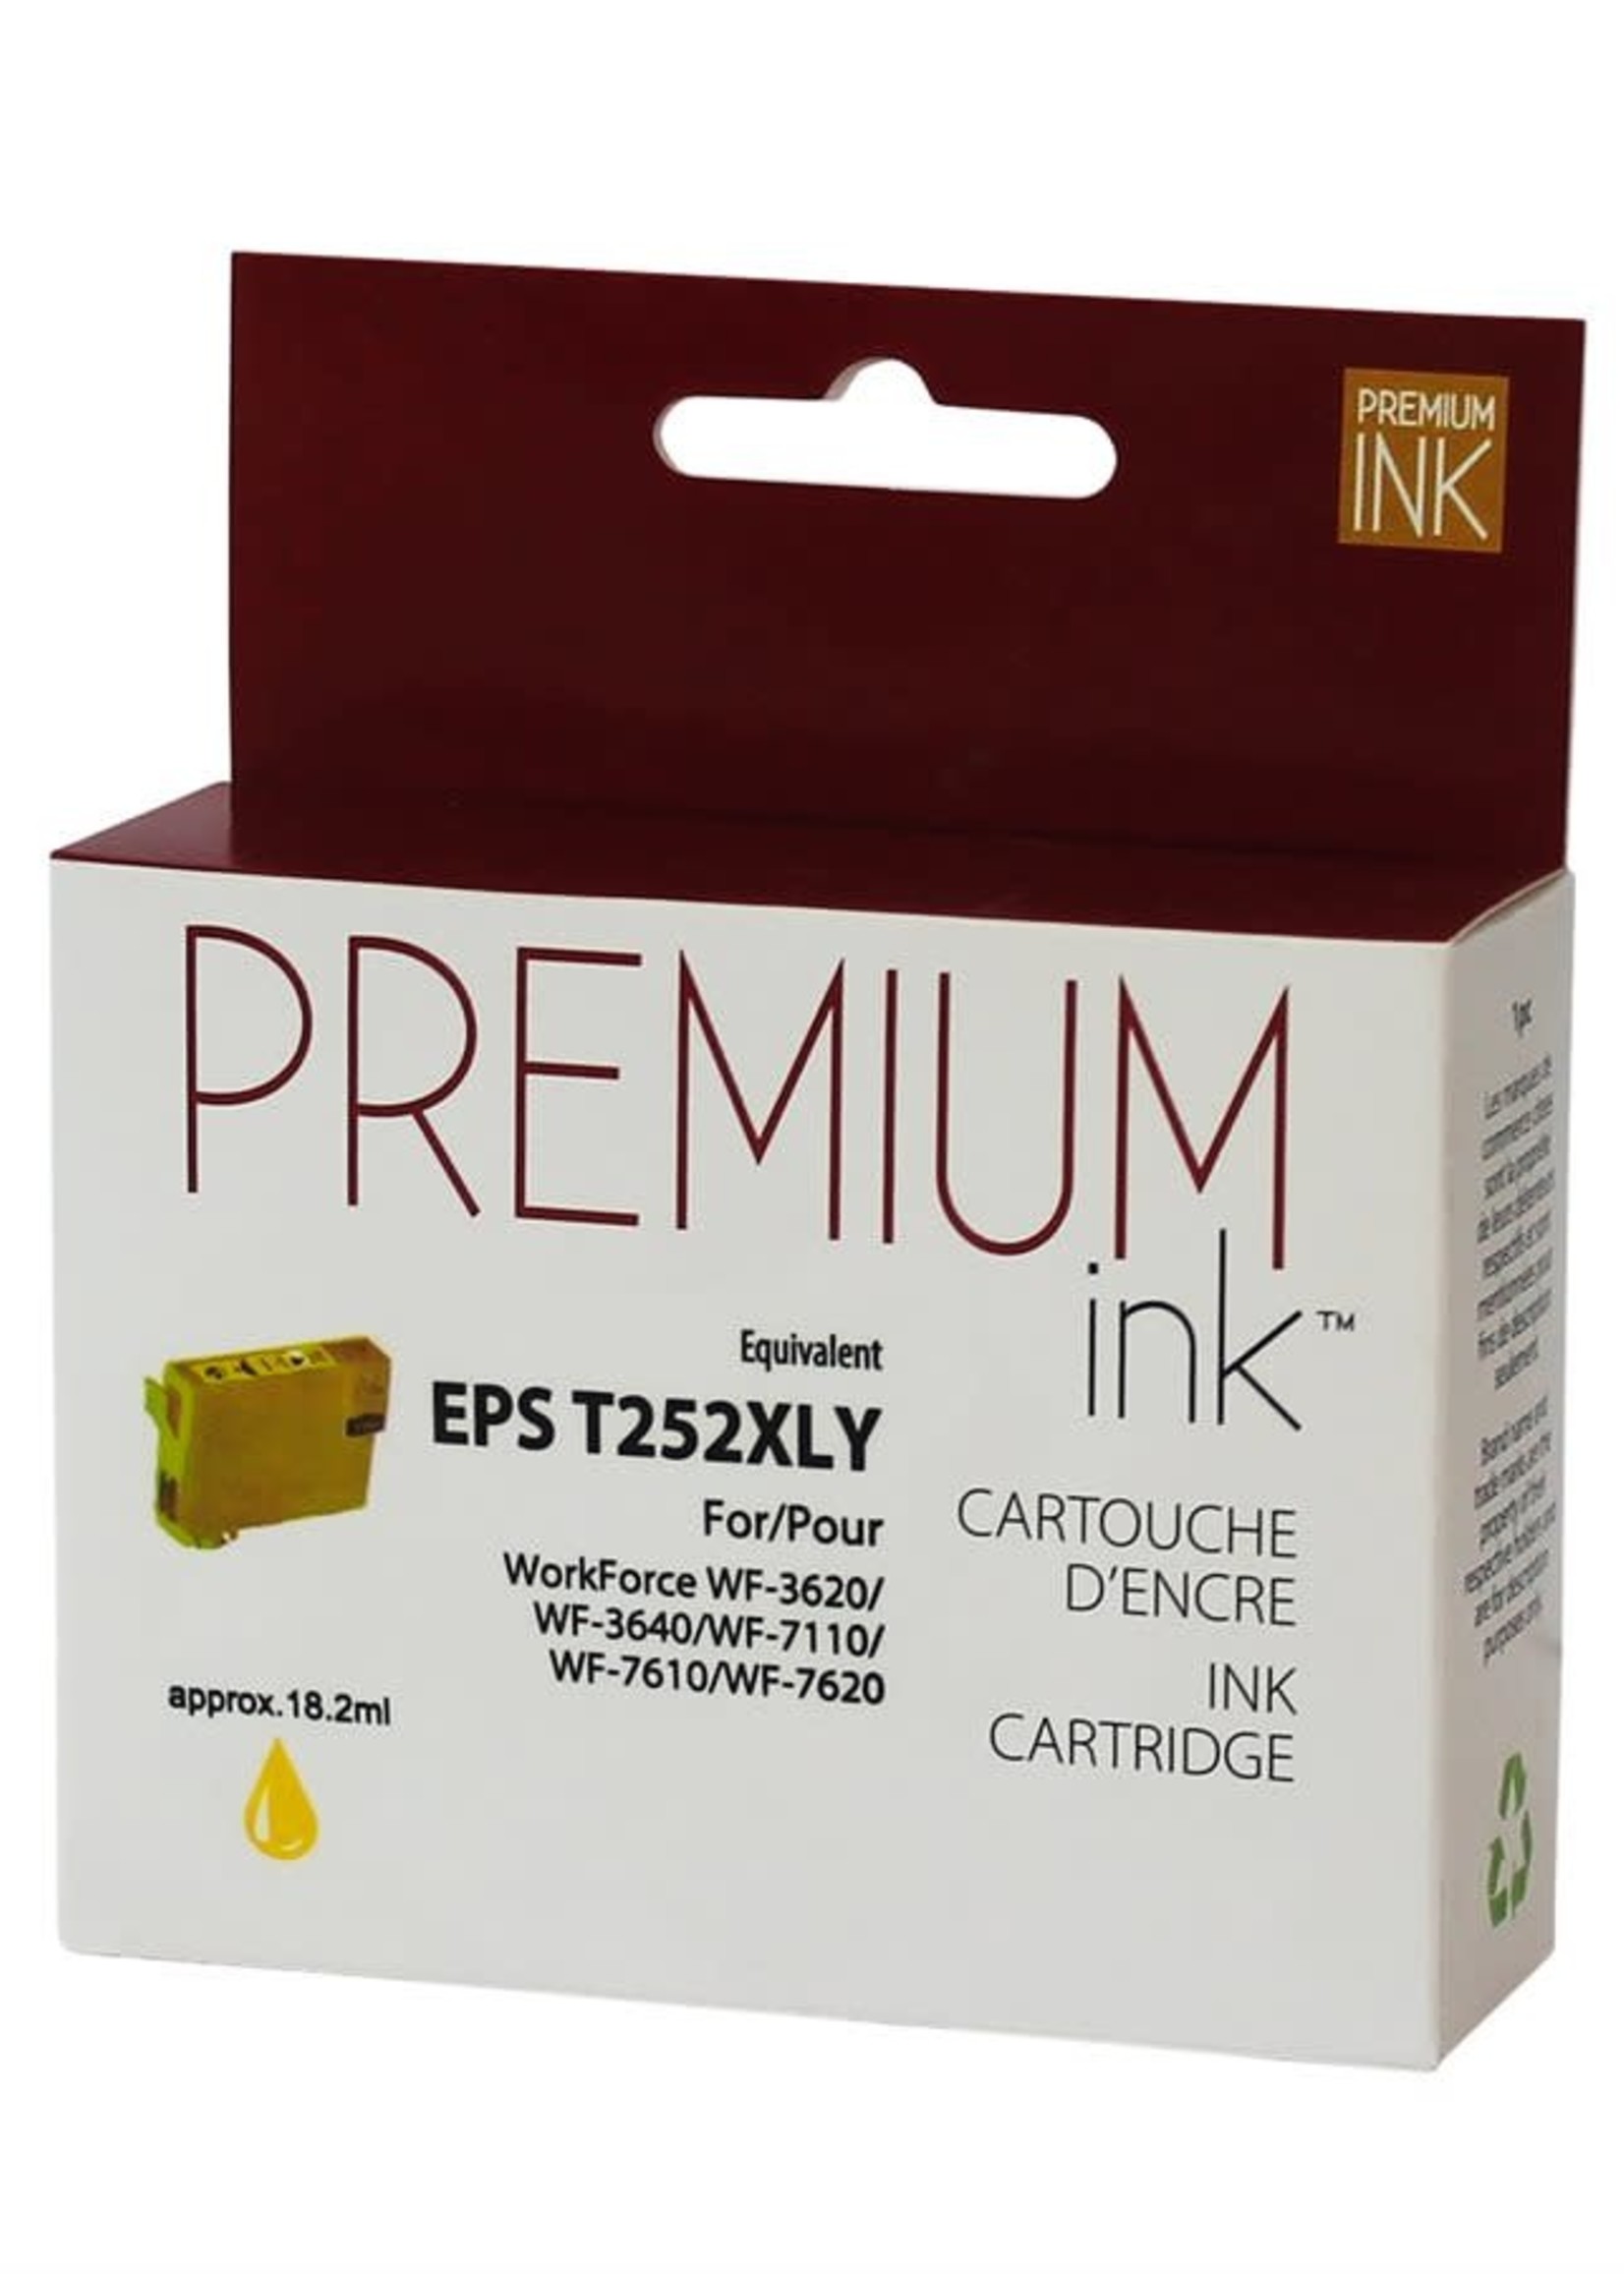 EPS T252XL Y PREMIUM INK